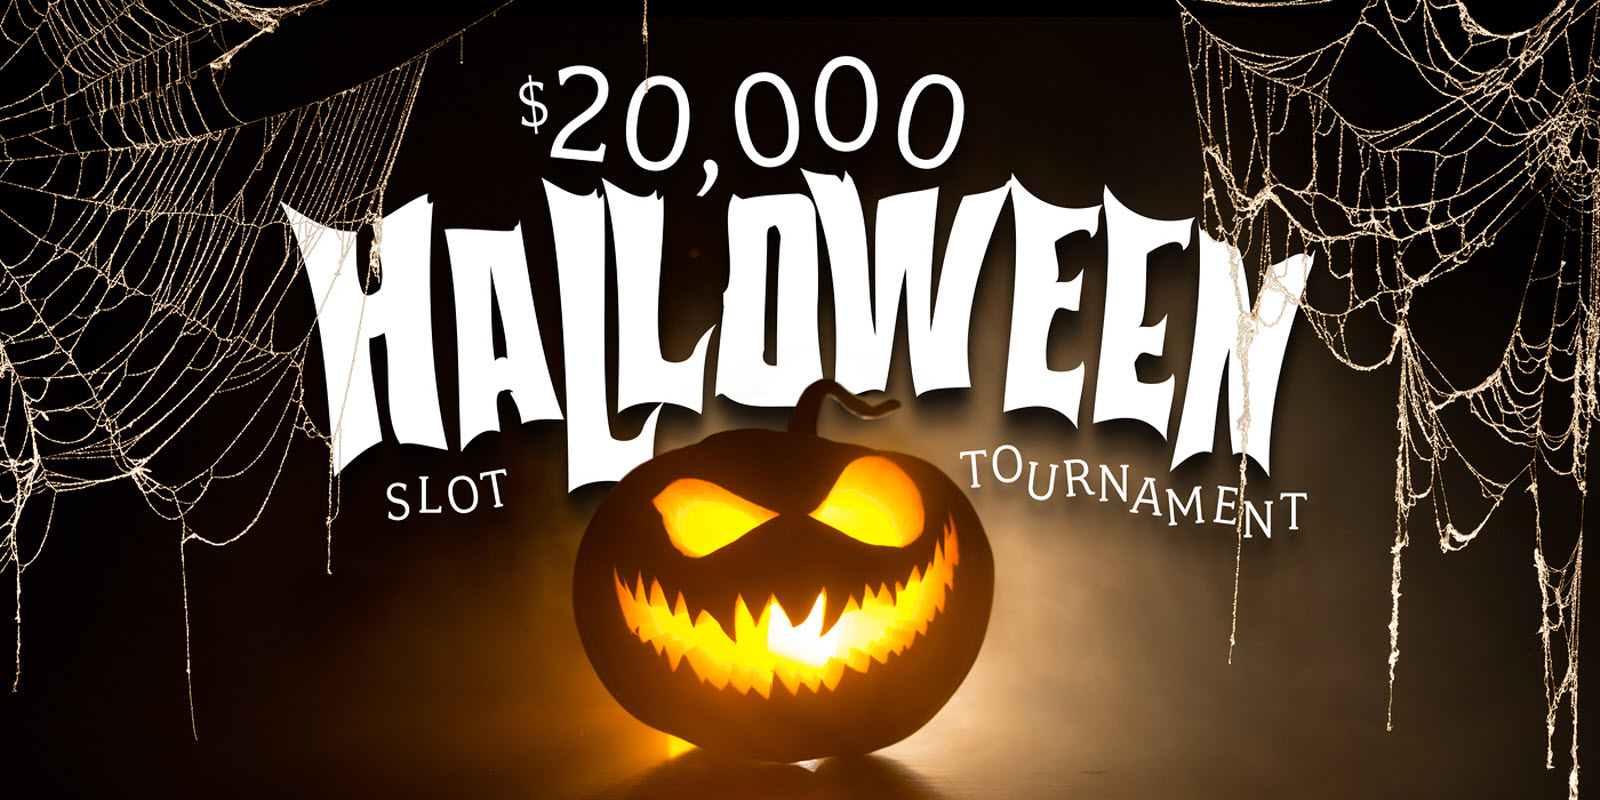 Jack o lantern in a Halloween slot tournament sign